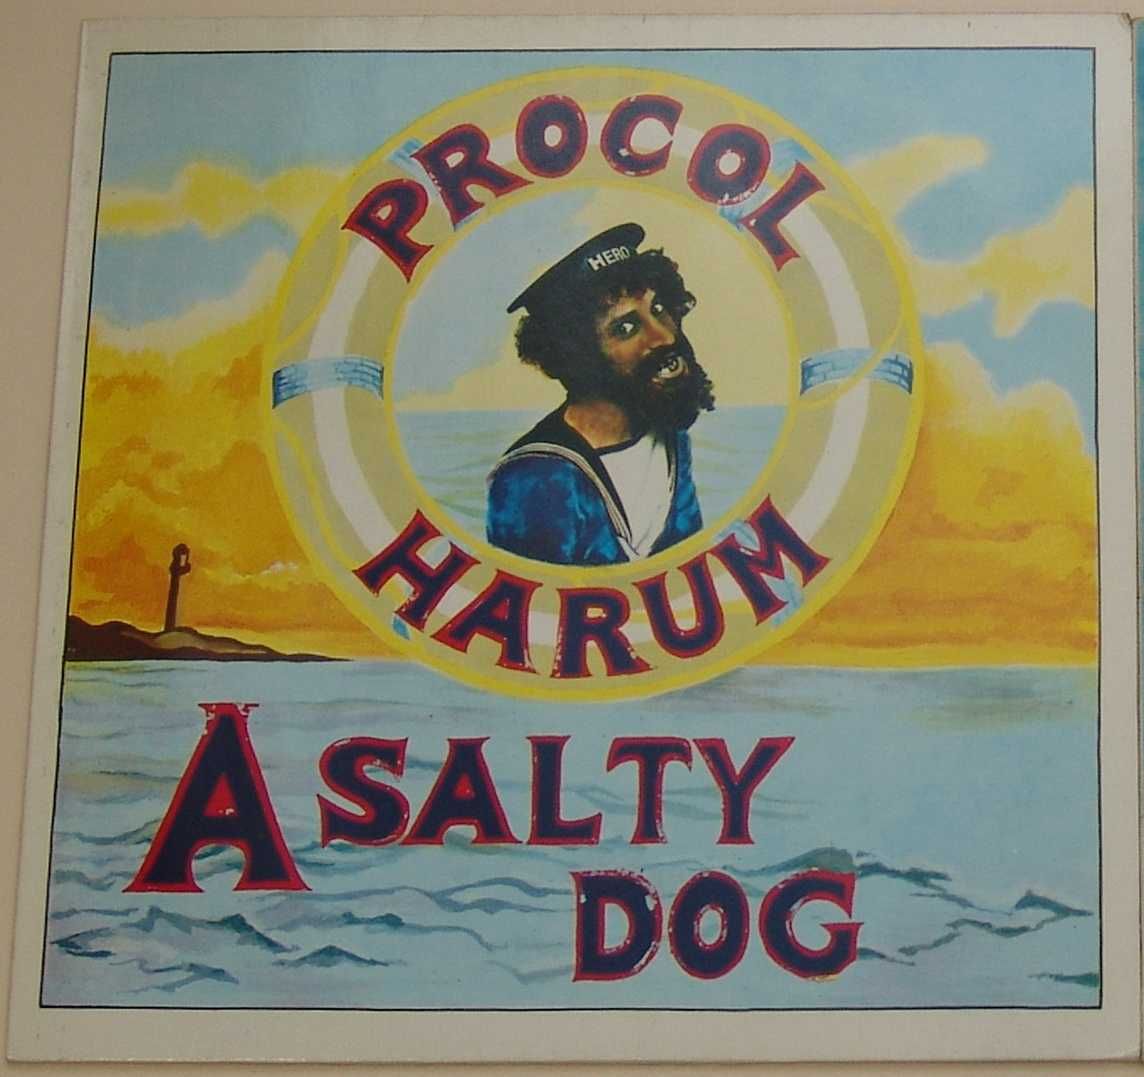 Пластинка Procol Harum "A Salty Dog" 1969. Оригинал Belgium